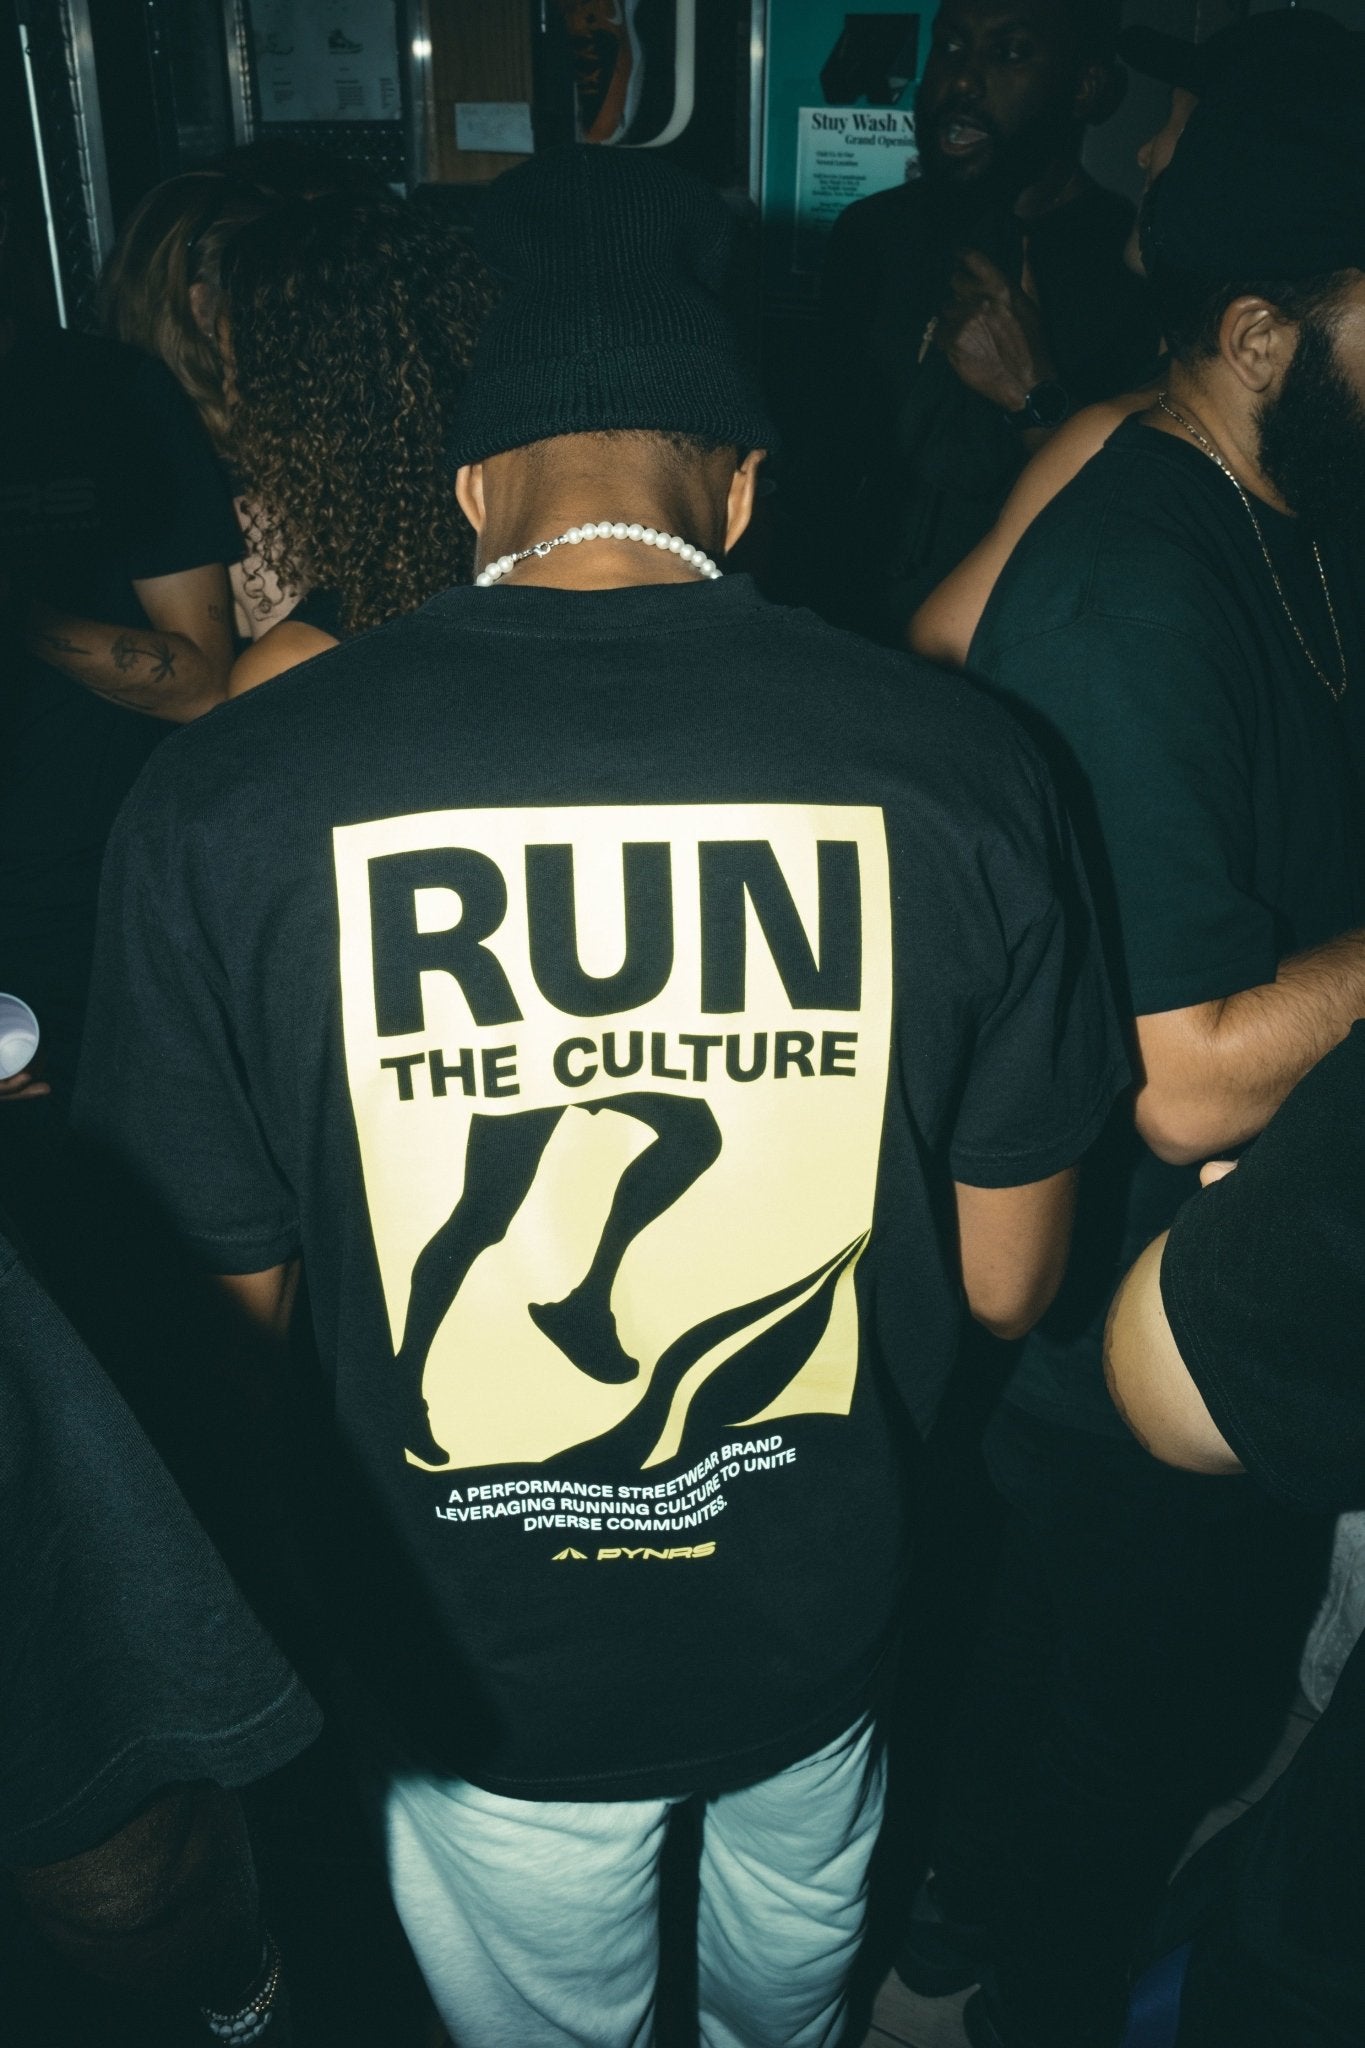 Run The Culture Tee - PYNRS Performance Streetwear